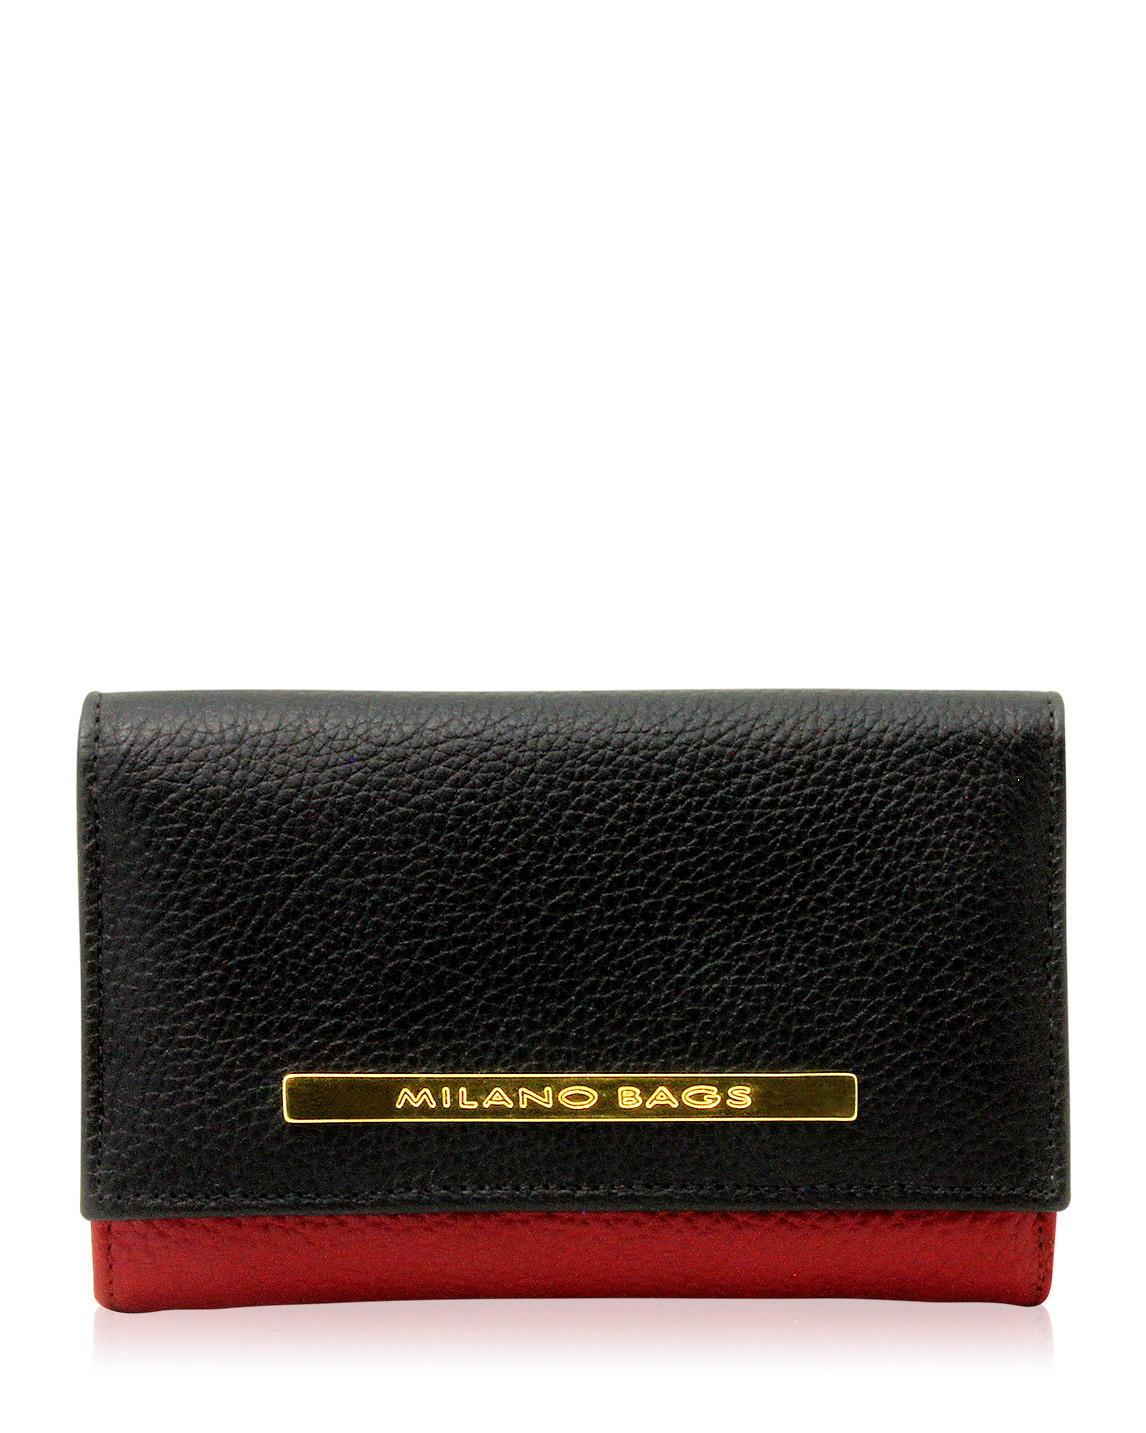 Billetera de Mujer BM-473 Color Rojo